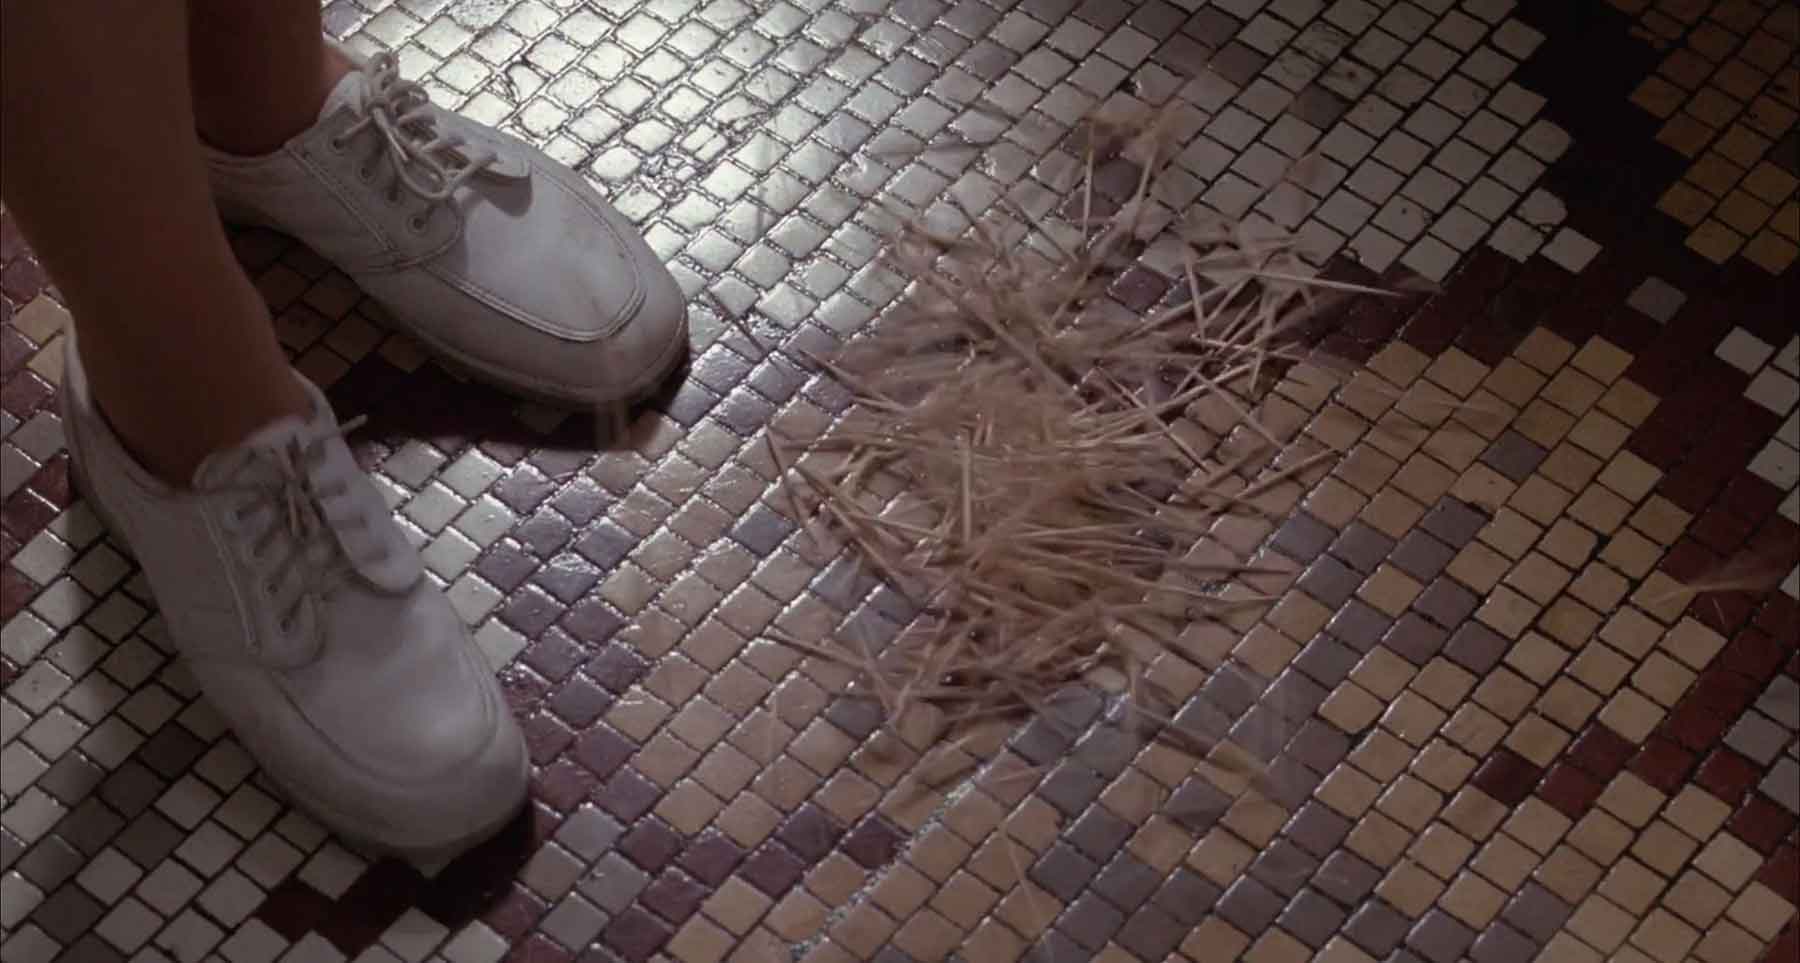 Toothpick scene from Rain Man film.